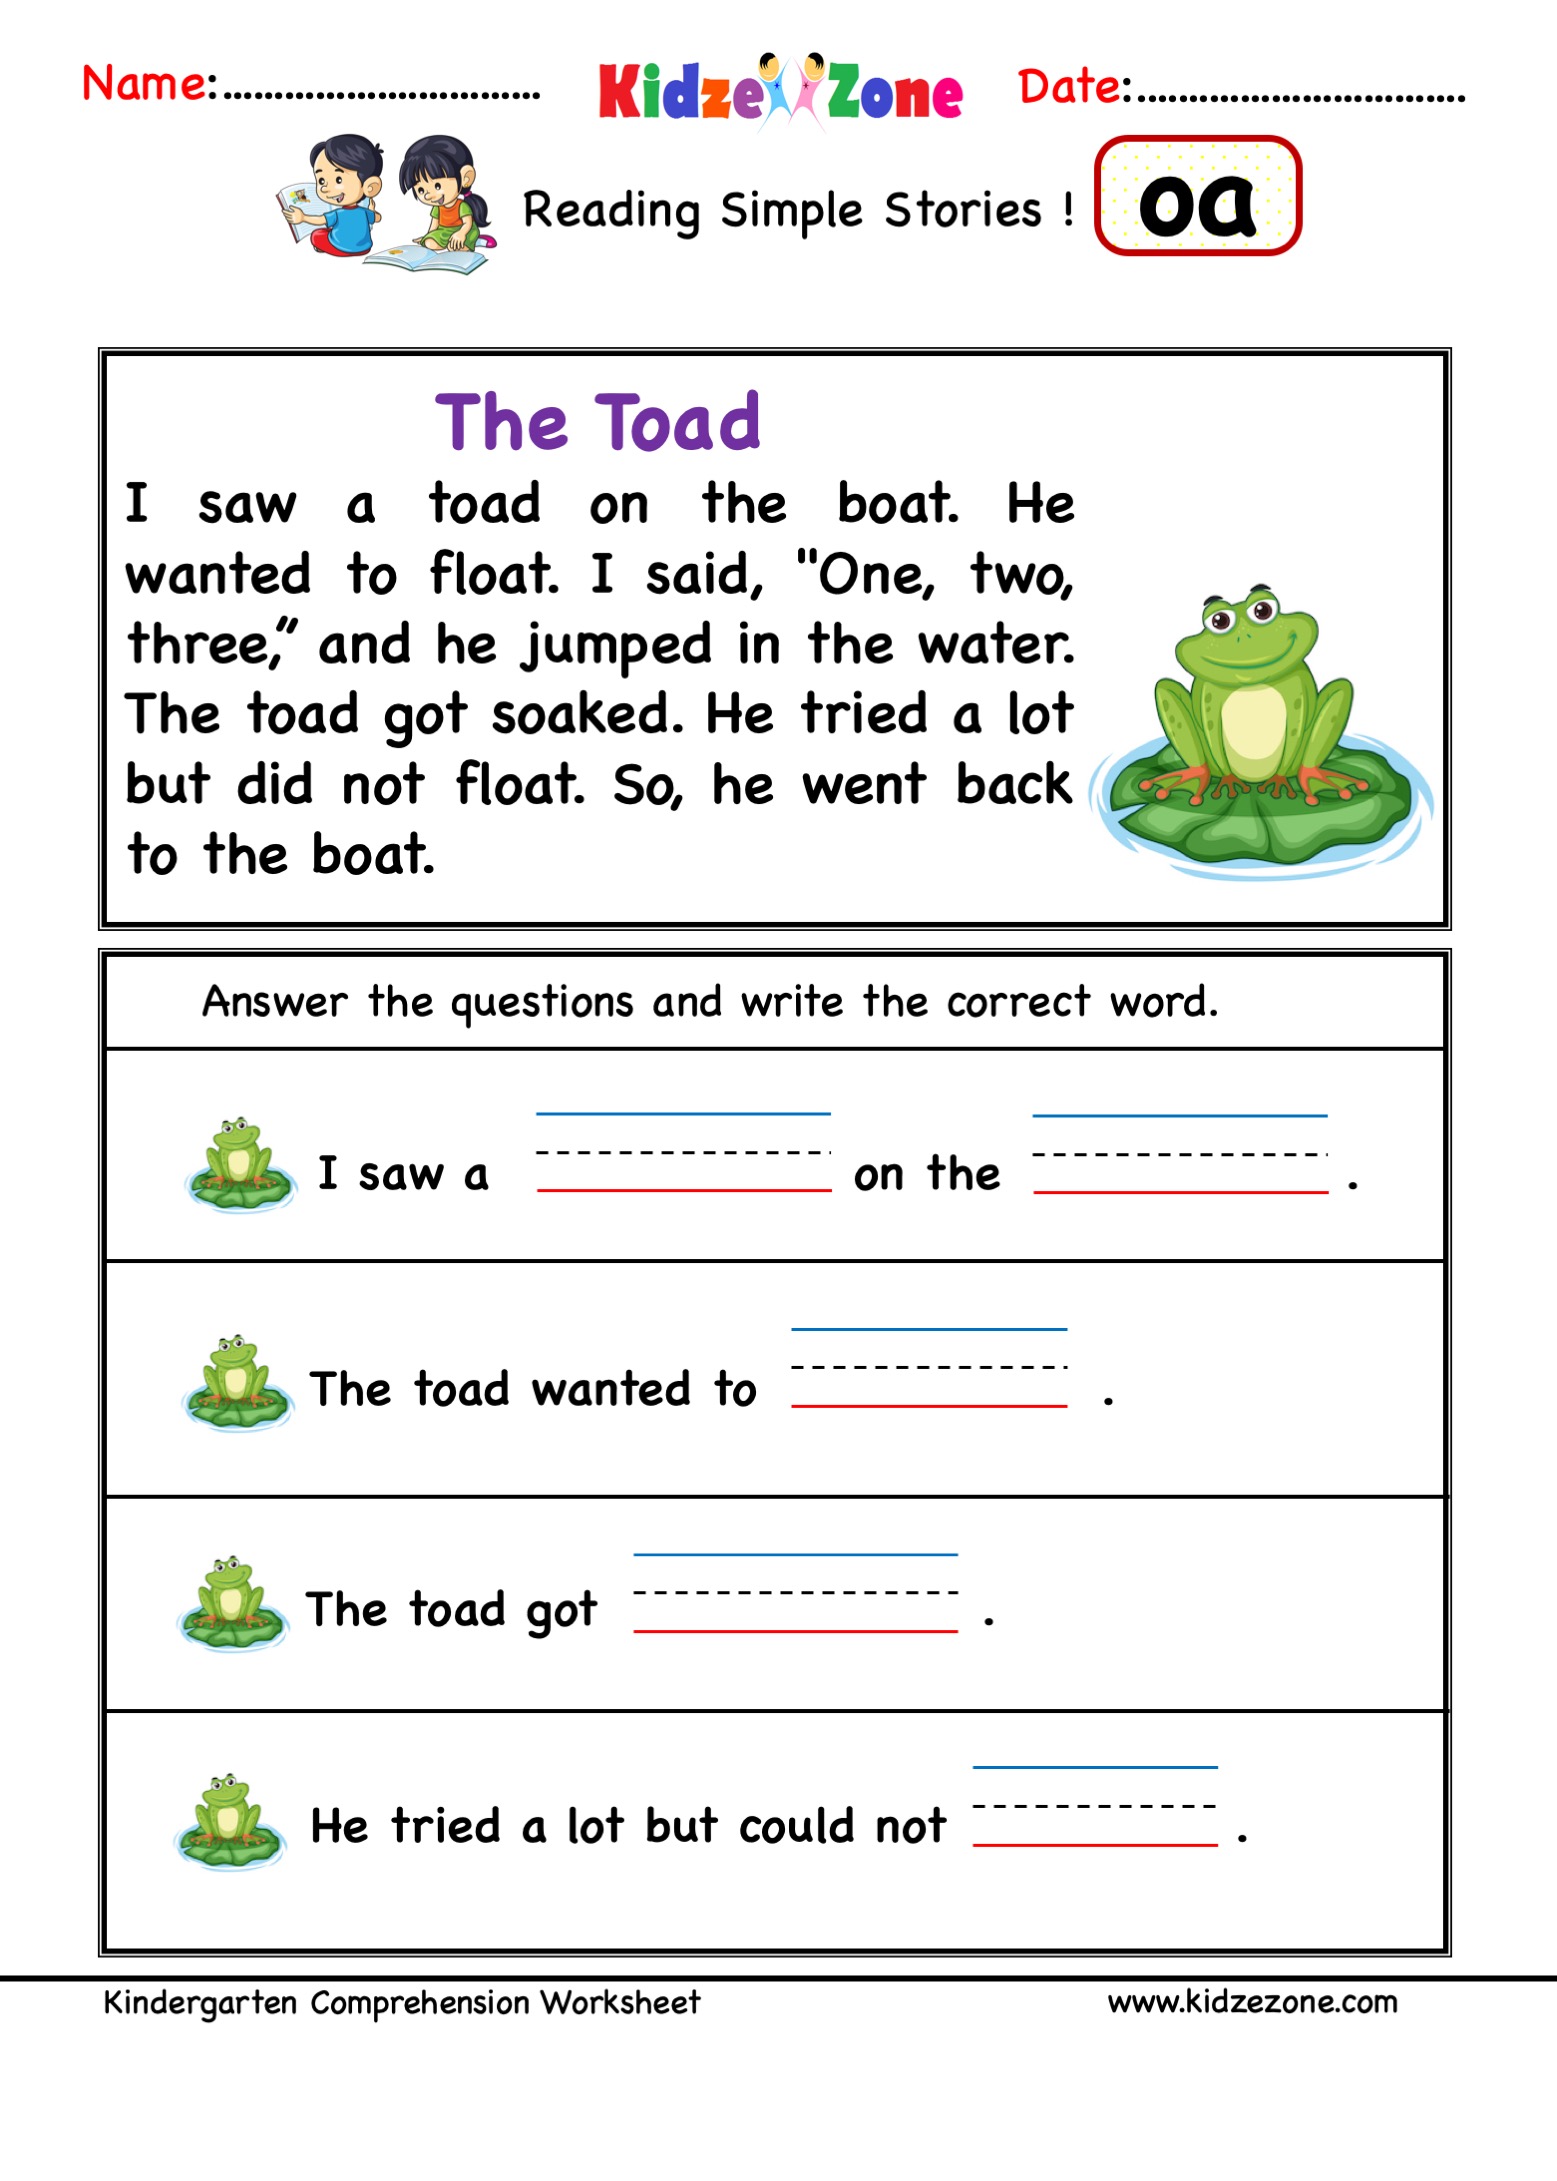 Free Preschool Kindergarten Reading Comprehension Worksheets K5 